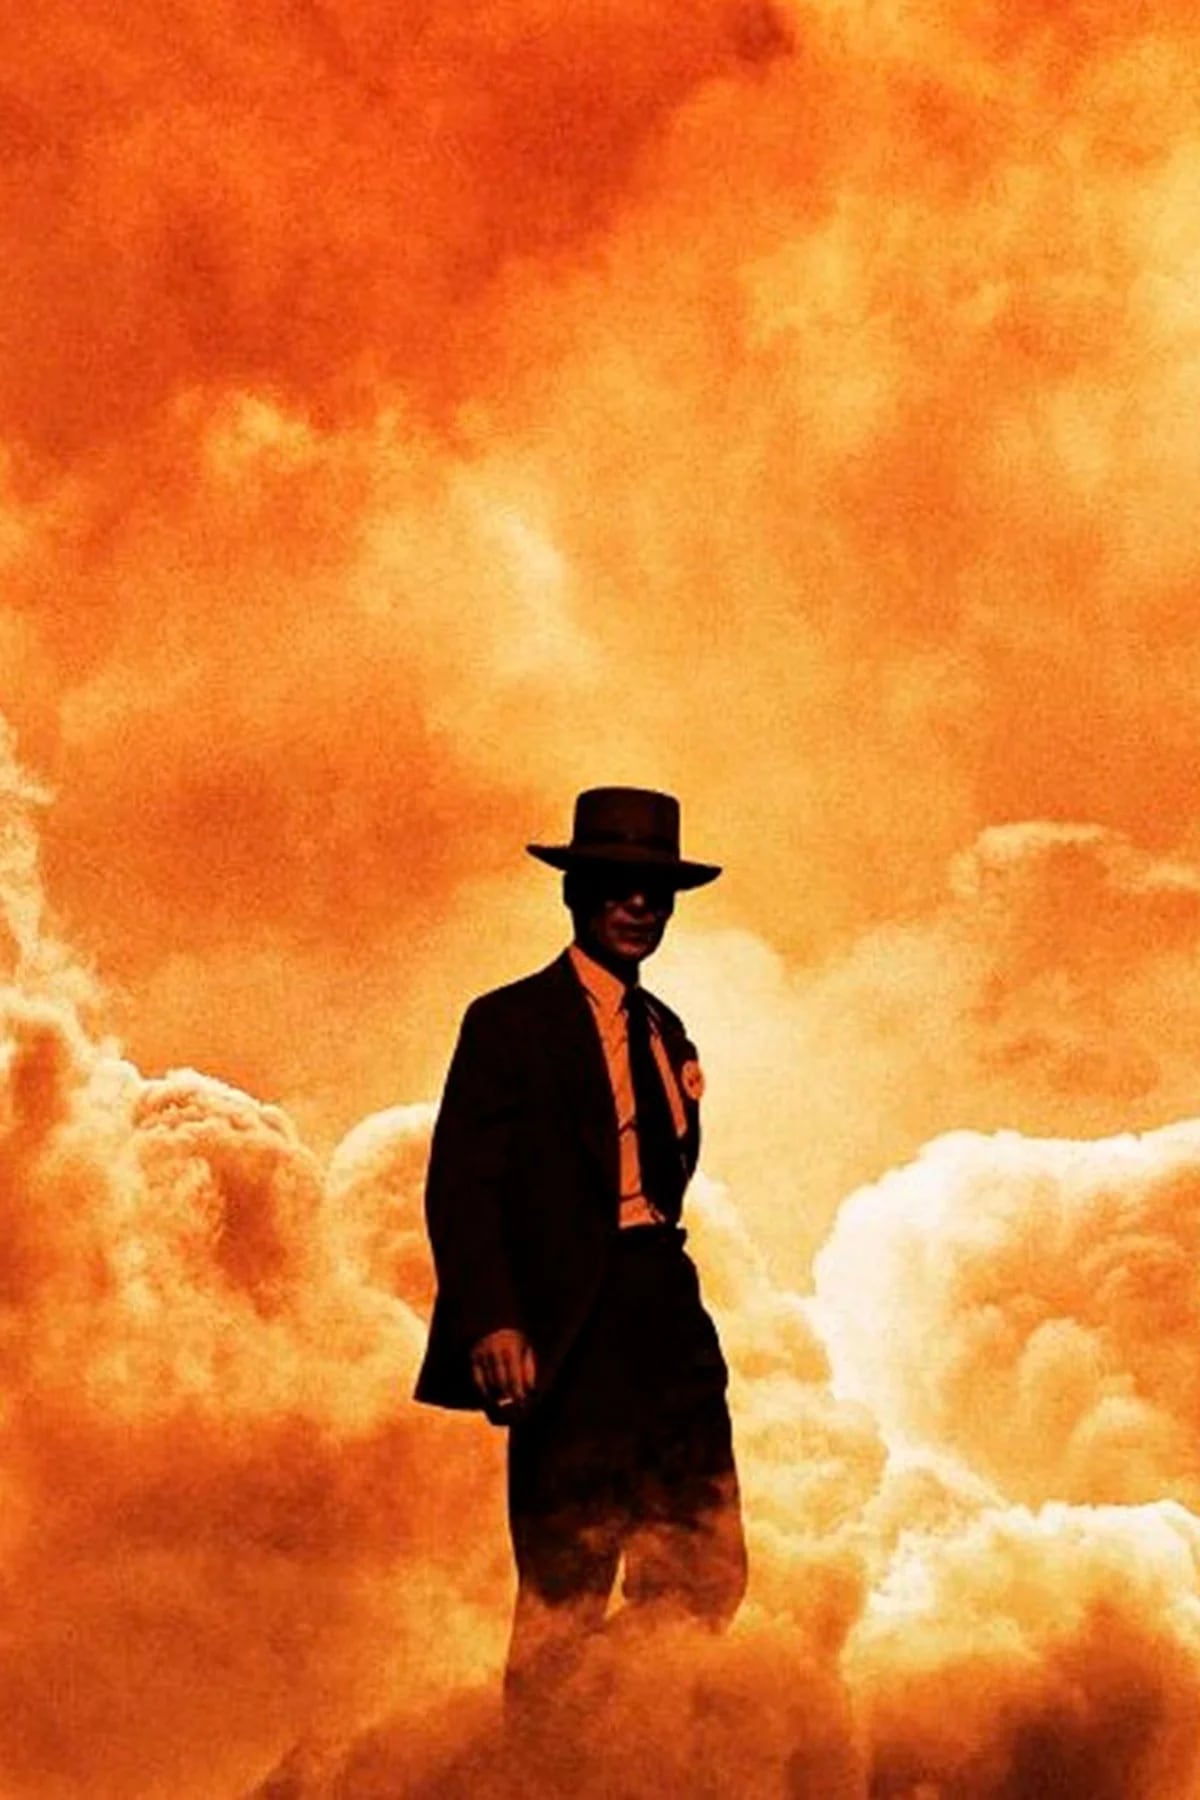 Oppenheimer'  Así es el Blu-ray, película Christopher Nolan